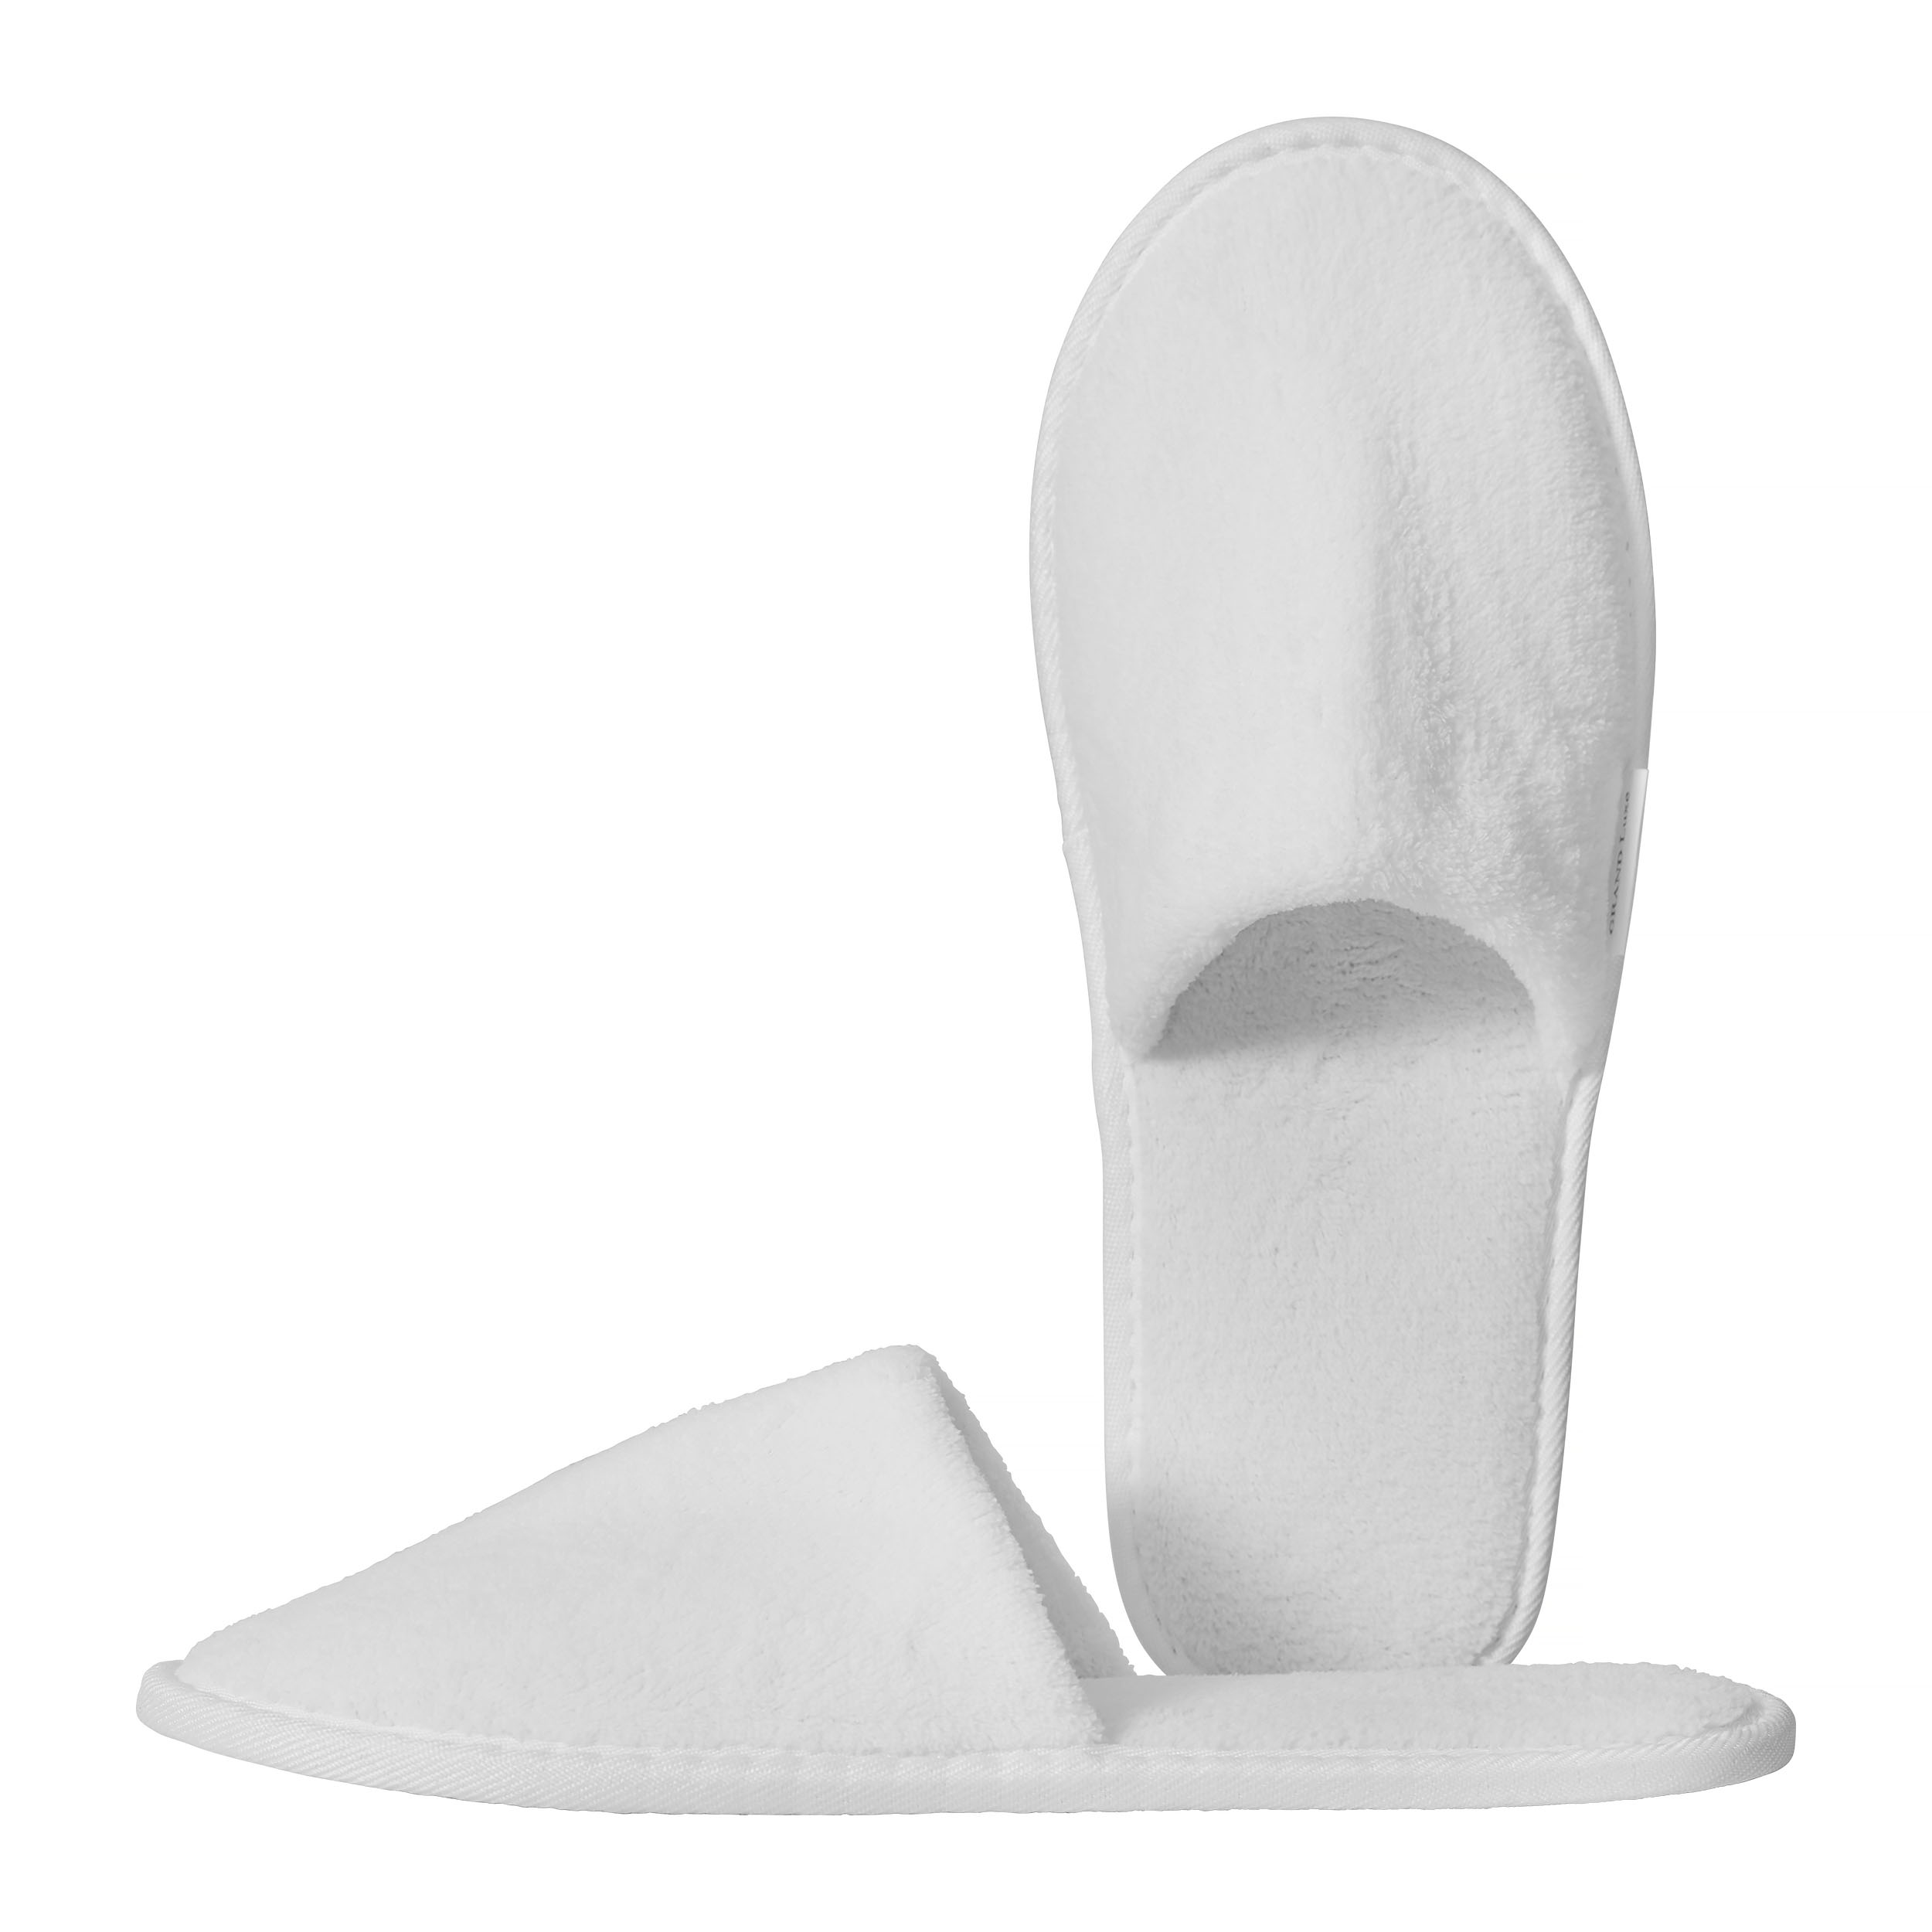 Slippers Grand luxe Premium White 31 cm